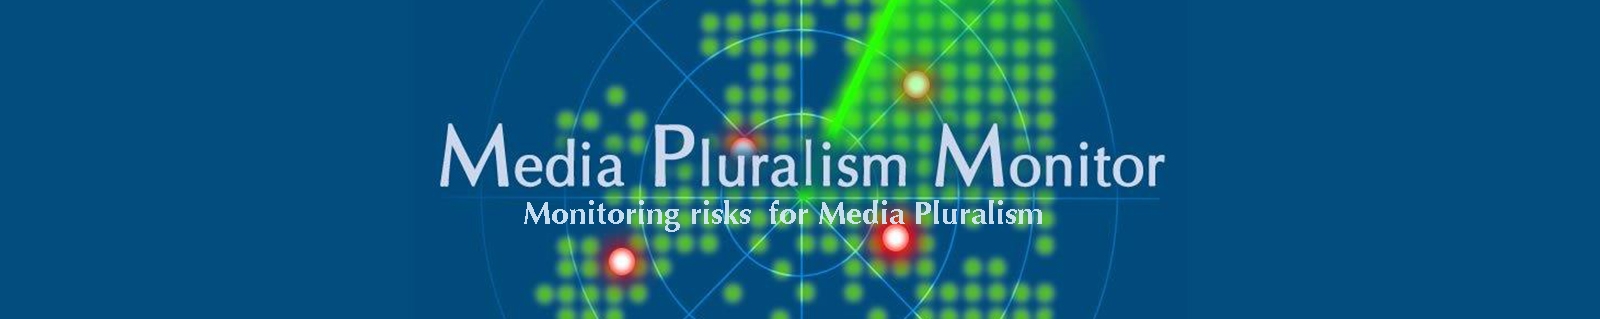 Media Pluralism Monitor (MPM) banner